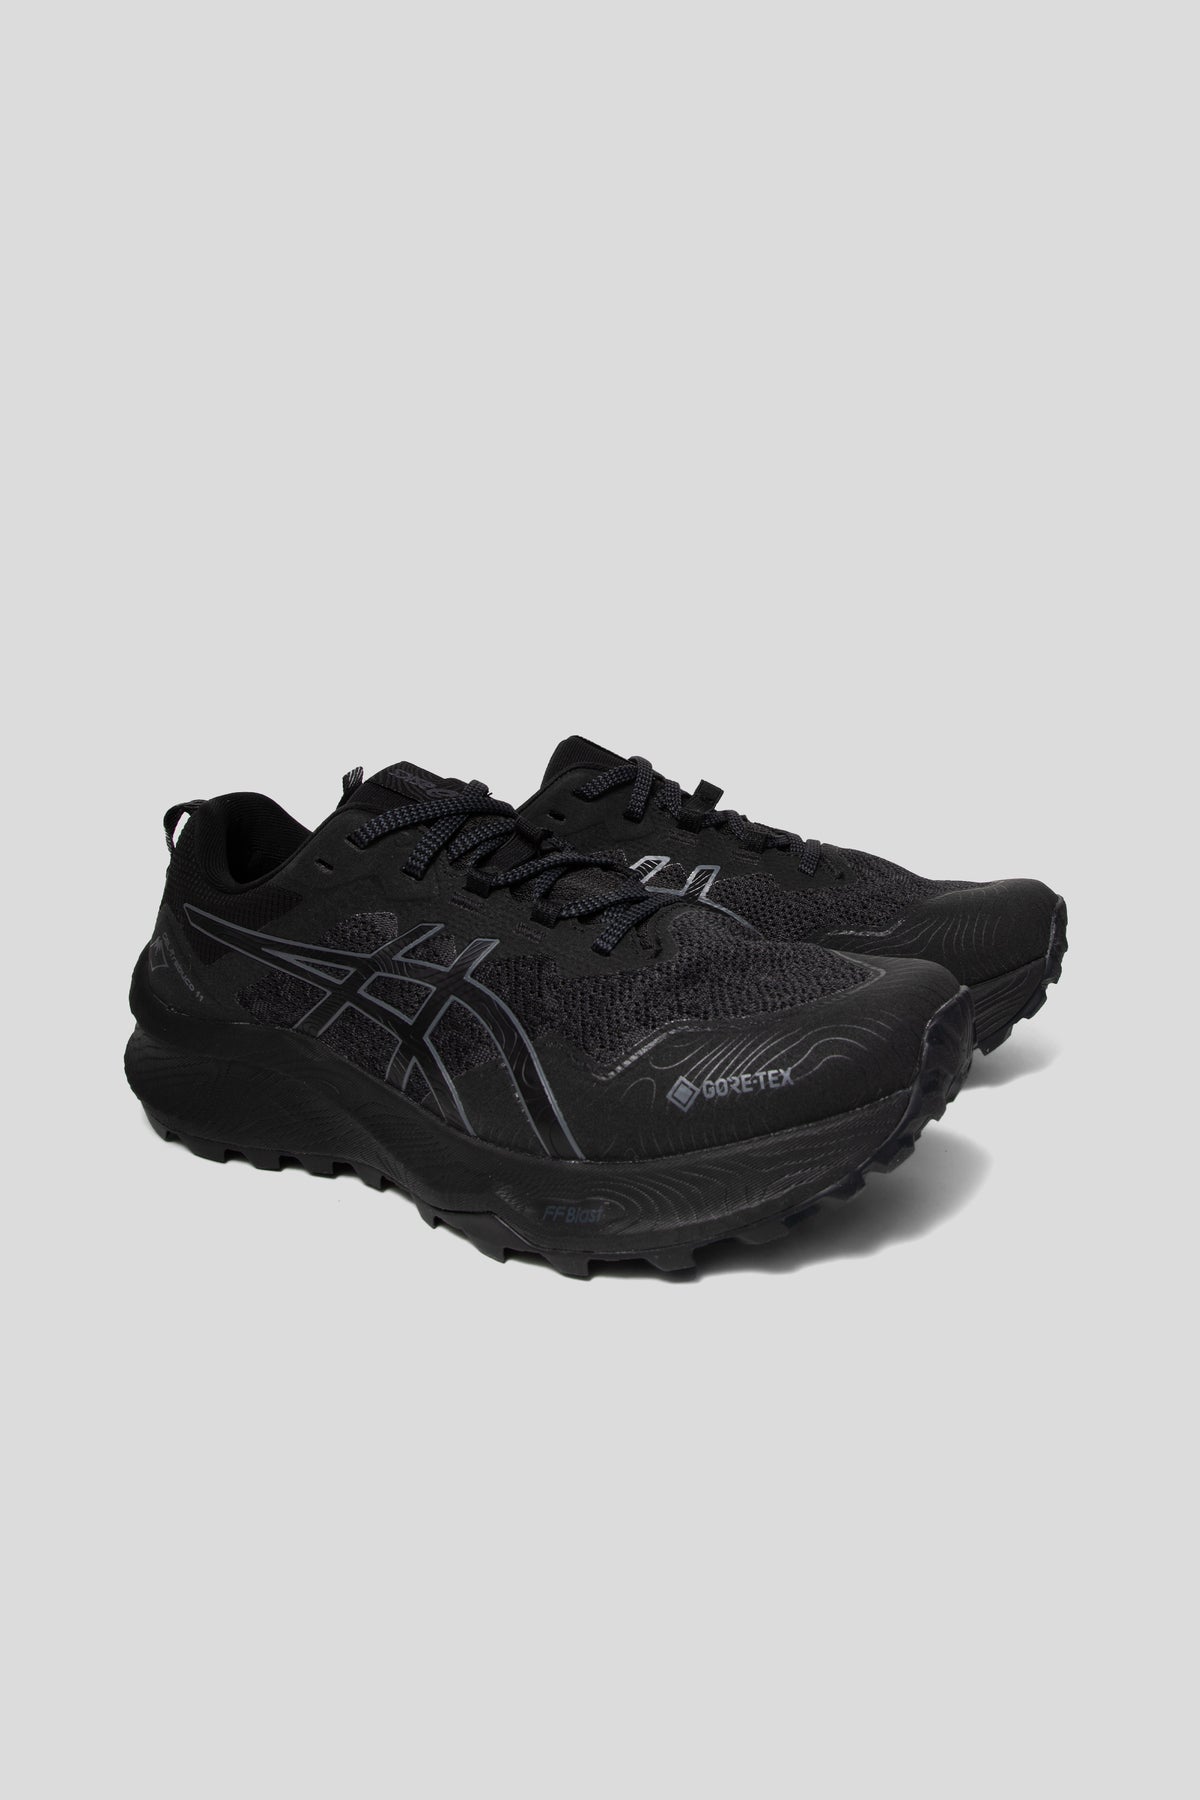 Asics Trabuco 11 GTX Shoe in Black/Carrier Grey